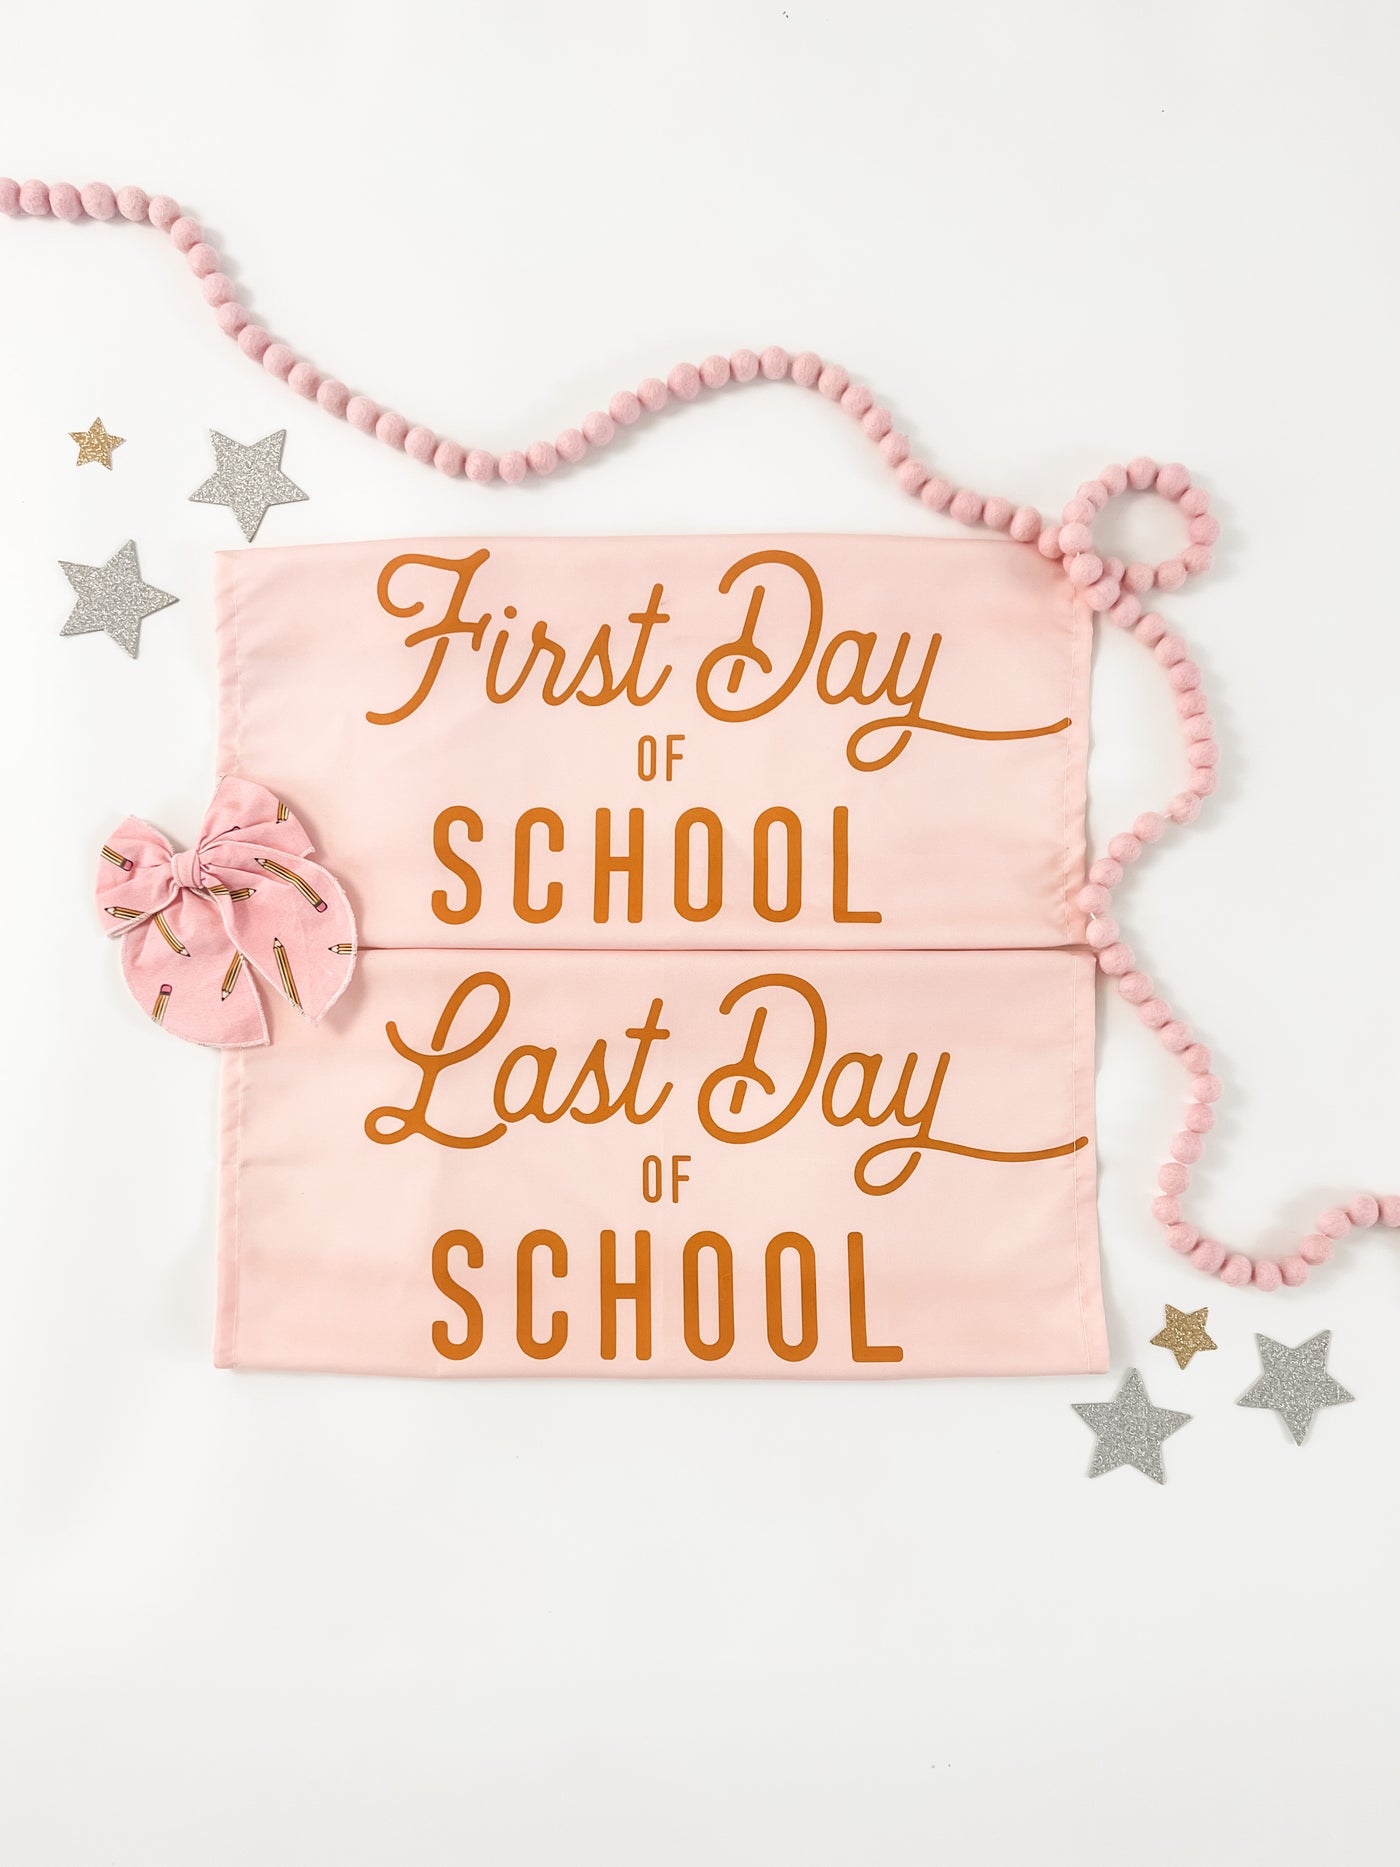 {Pink} School Banner Bundle